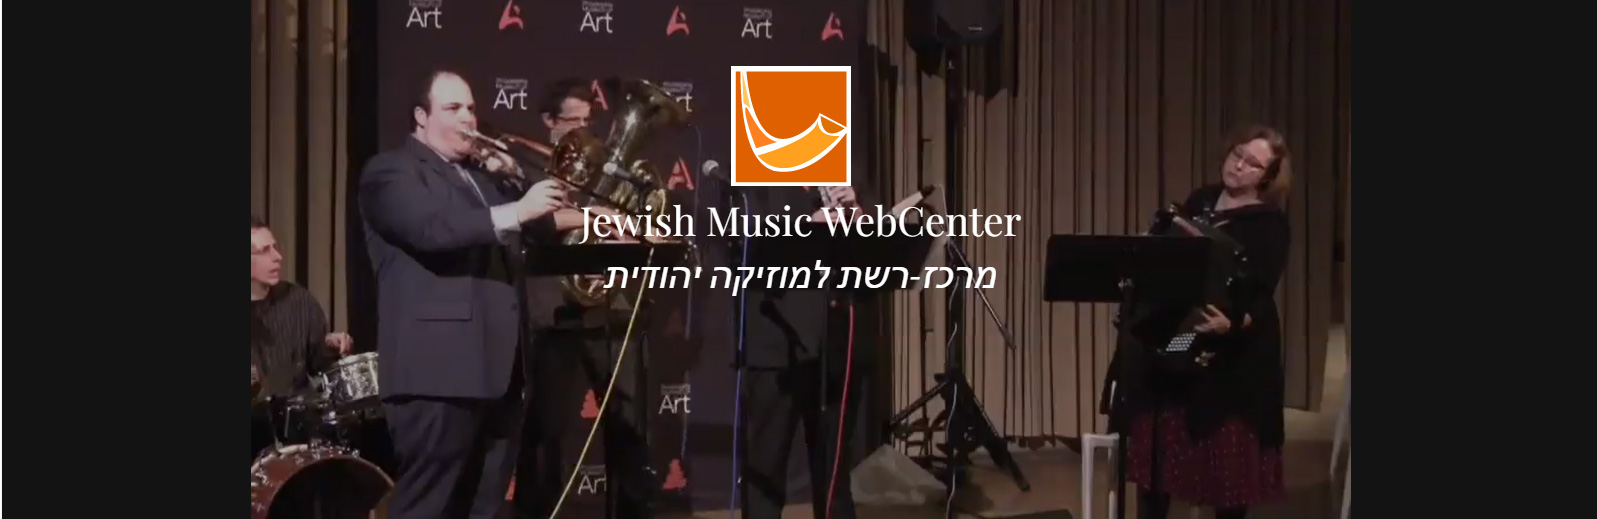 Jewish Music WebCenter